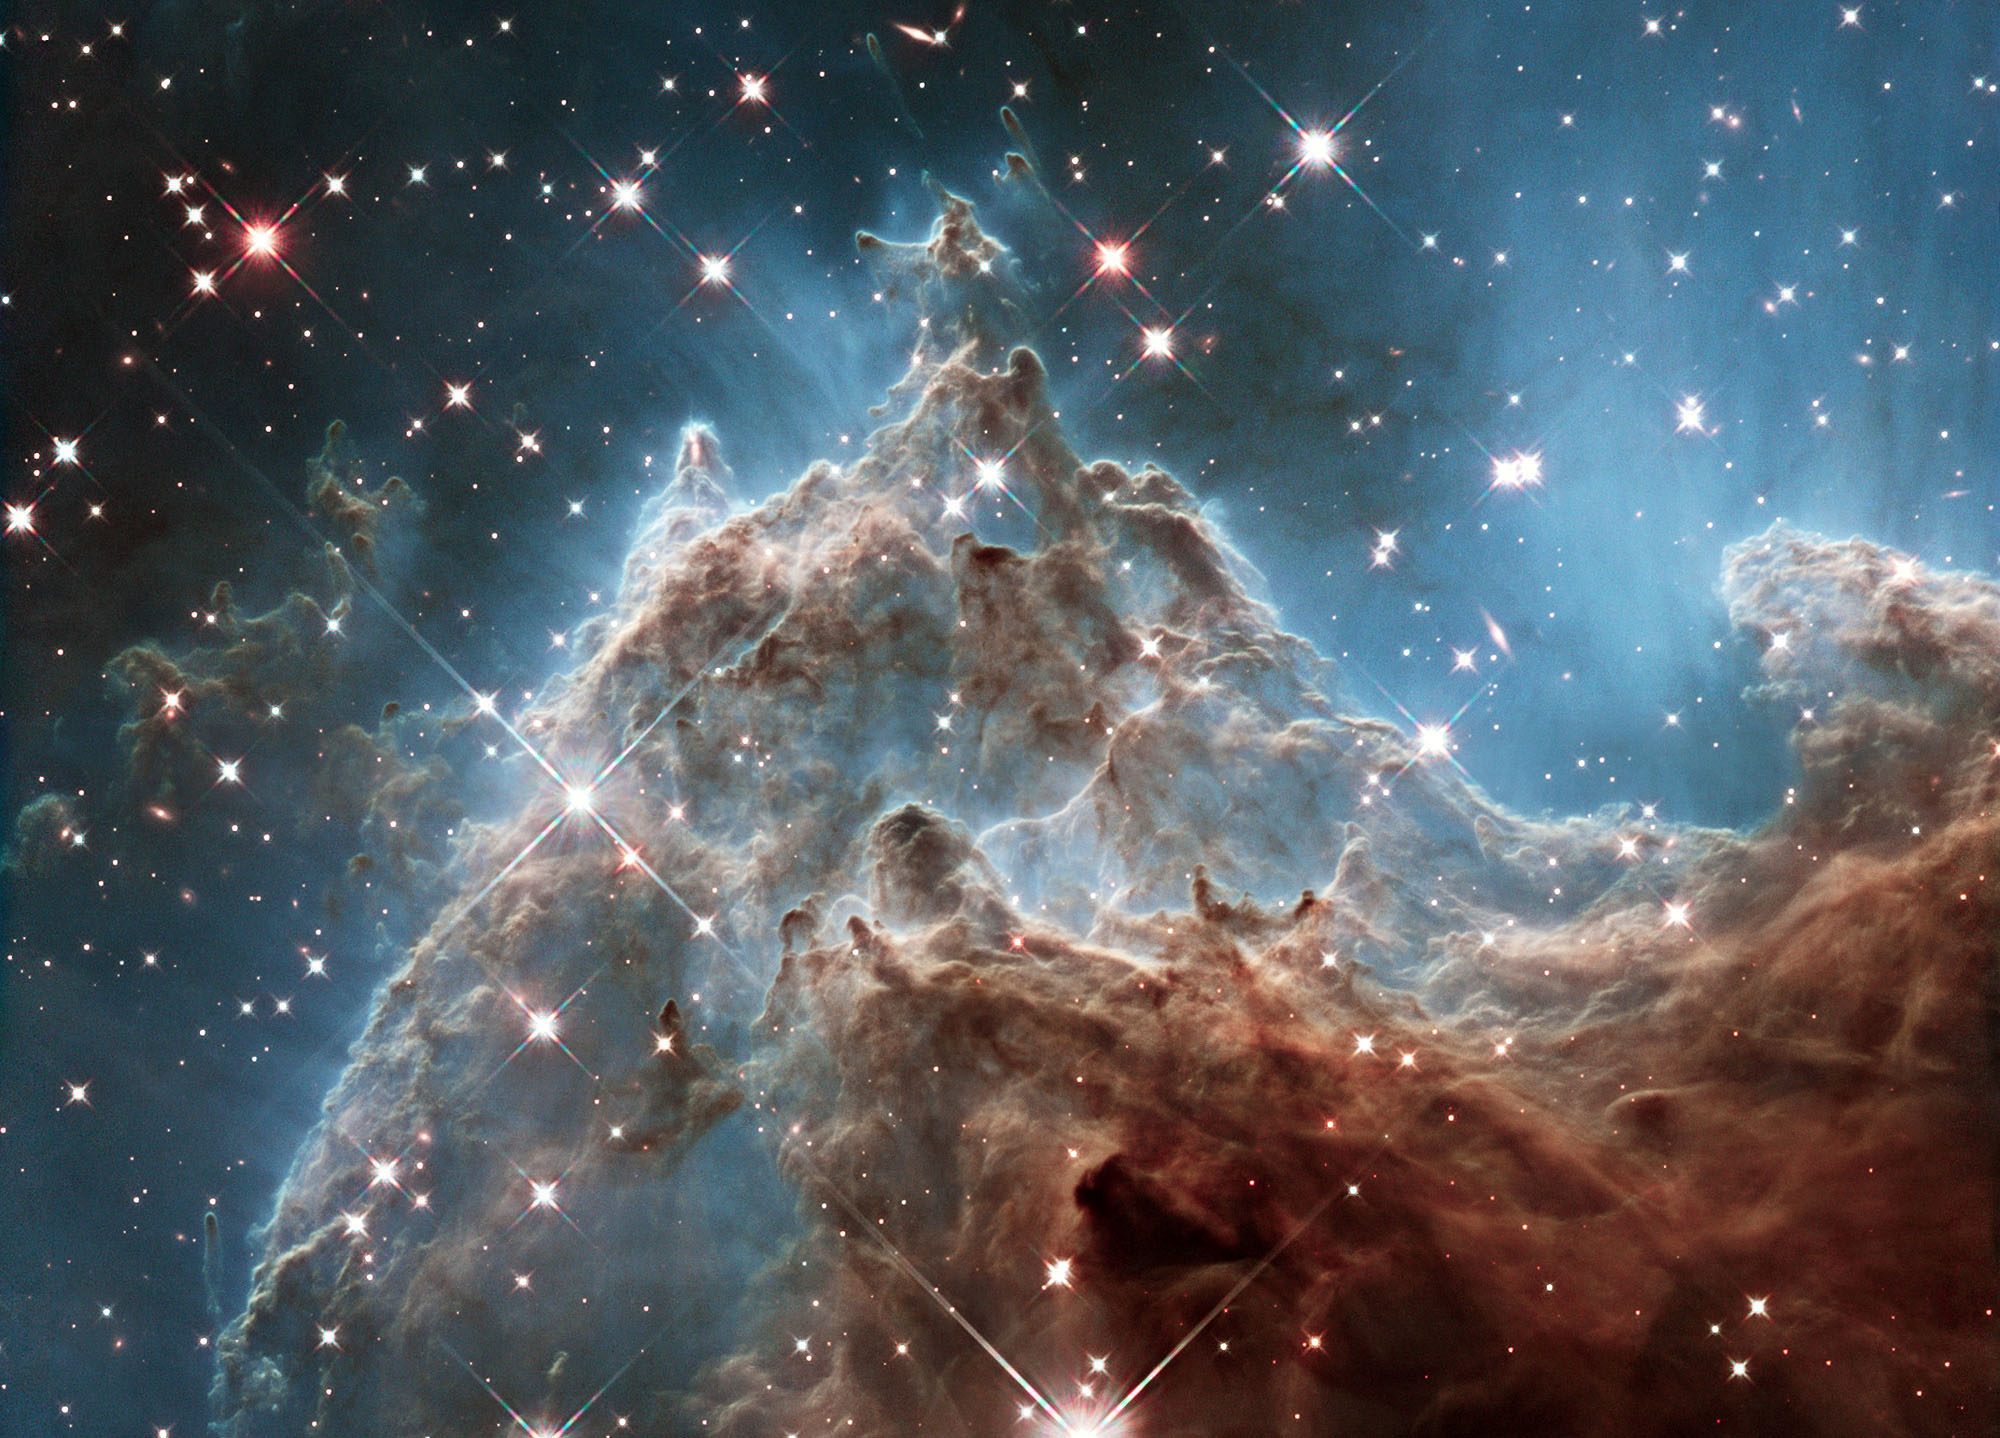 Hubble Captures a Ring Fine Art Print